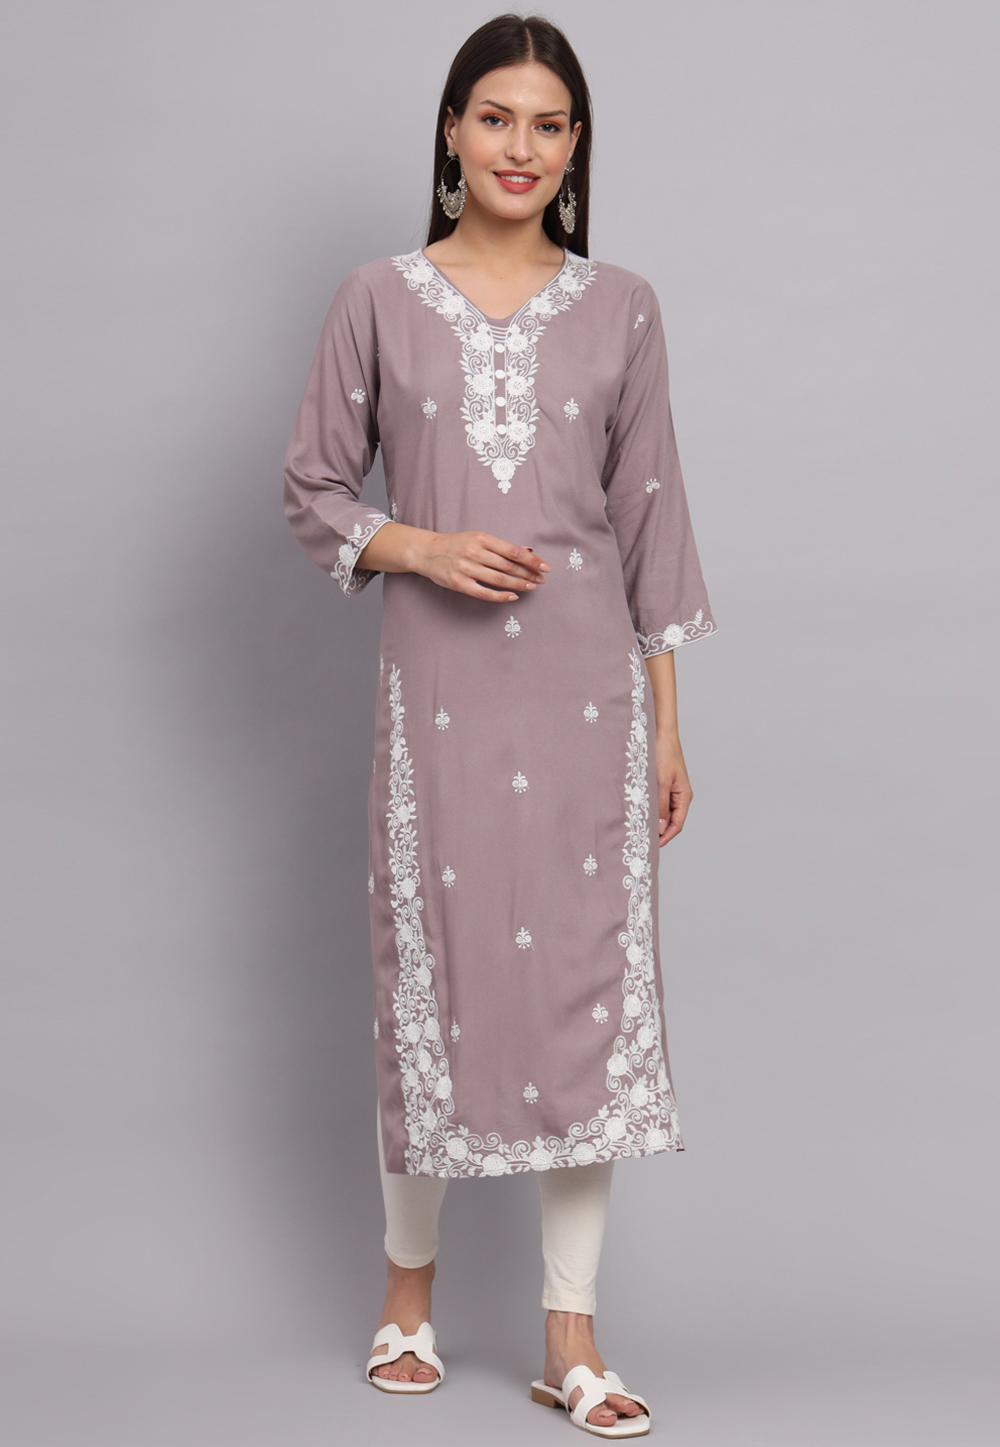 Traditional Women's Kurti Pant Set Bollywood Wedding Wear Kurta Pajama  Dresses | eBay